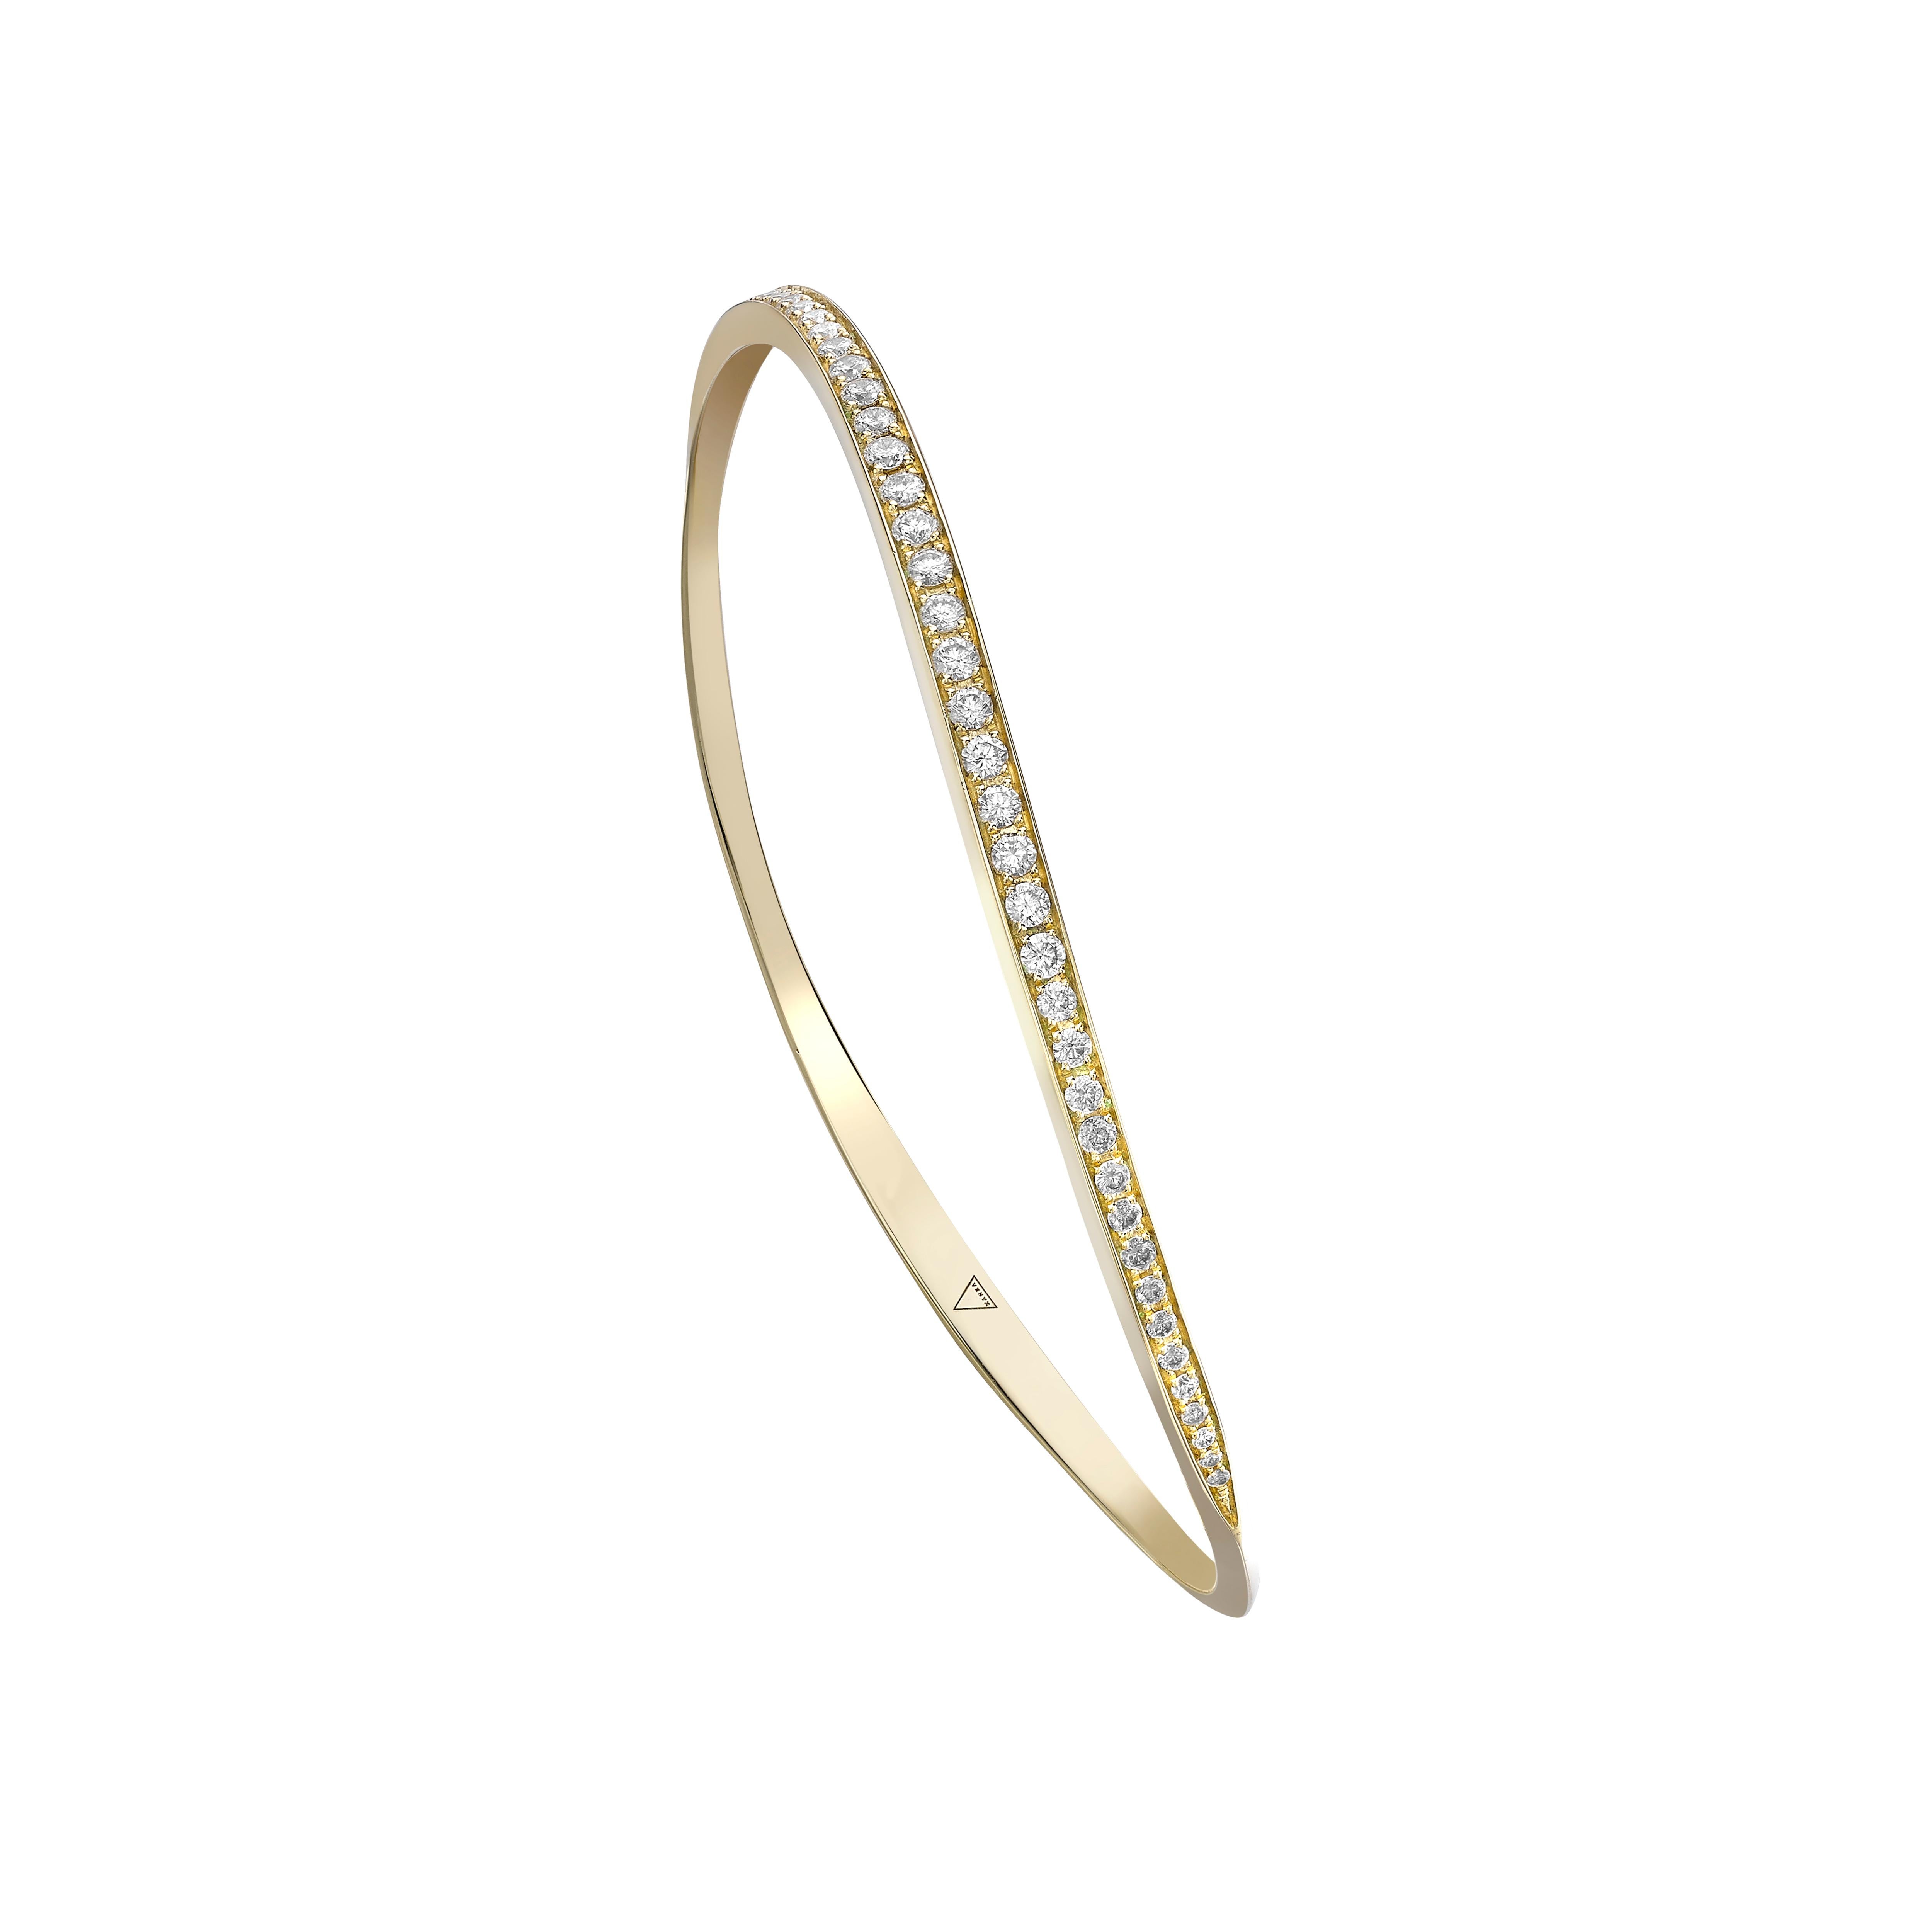 Contemporary Venyx 18 Karat Yellow Gold and Diamond Orbit Bangle Bracelet